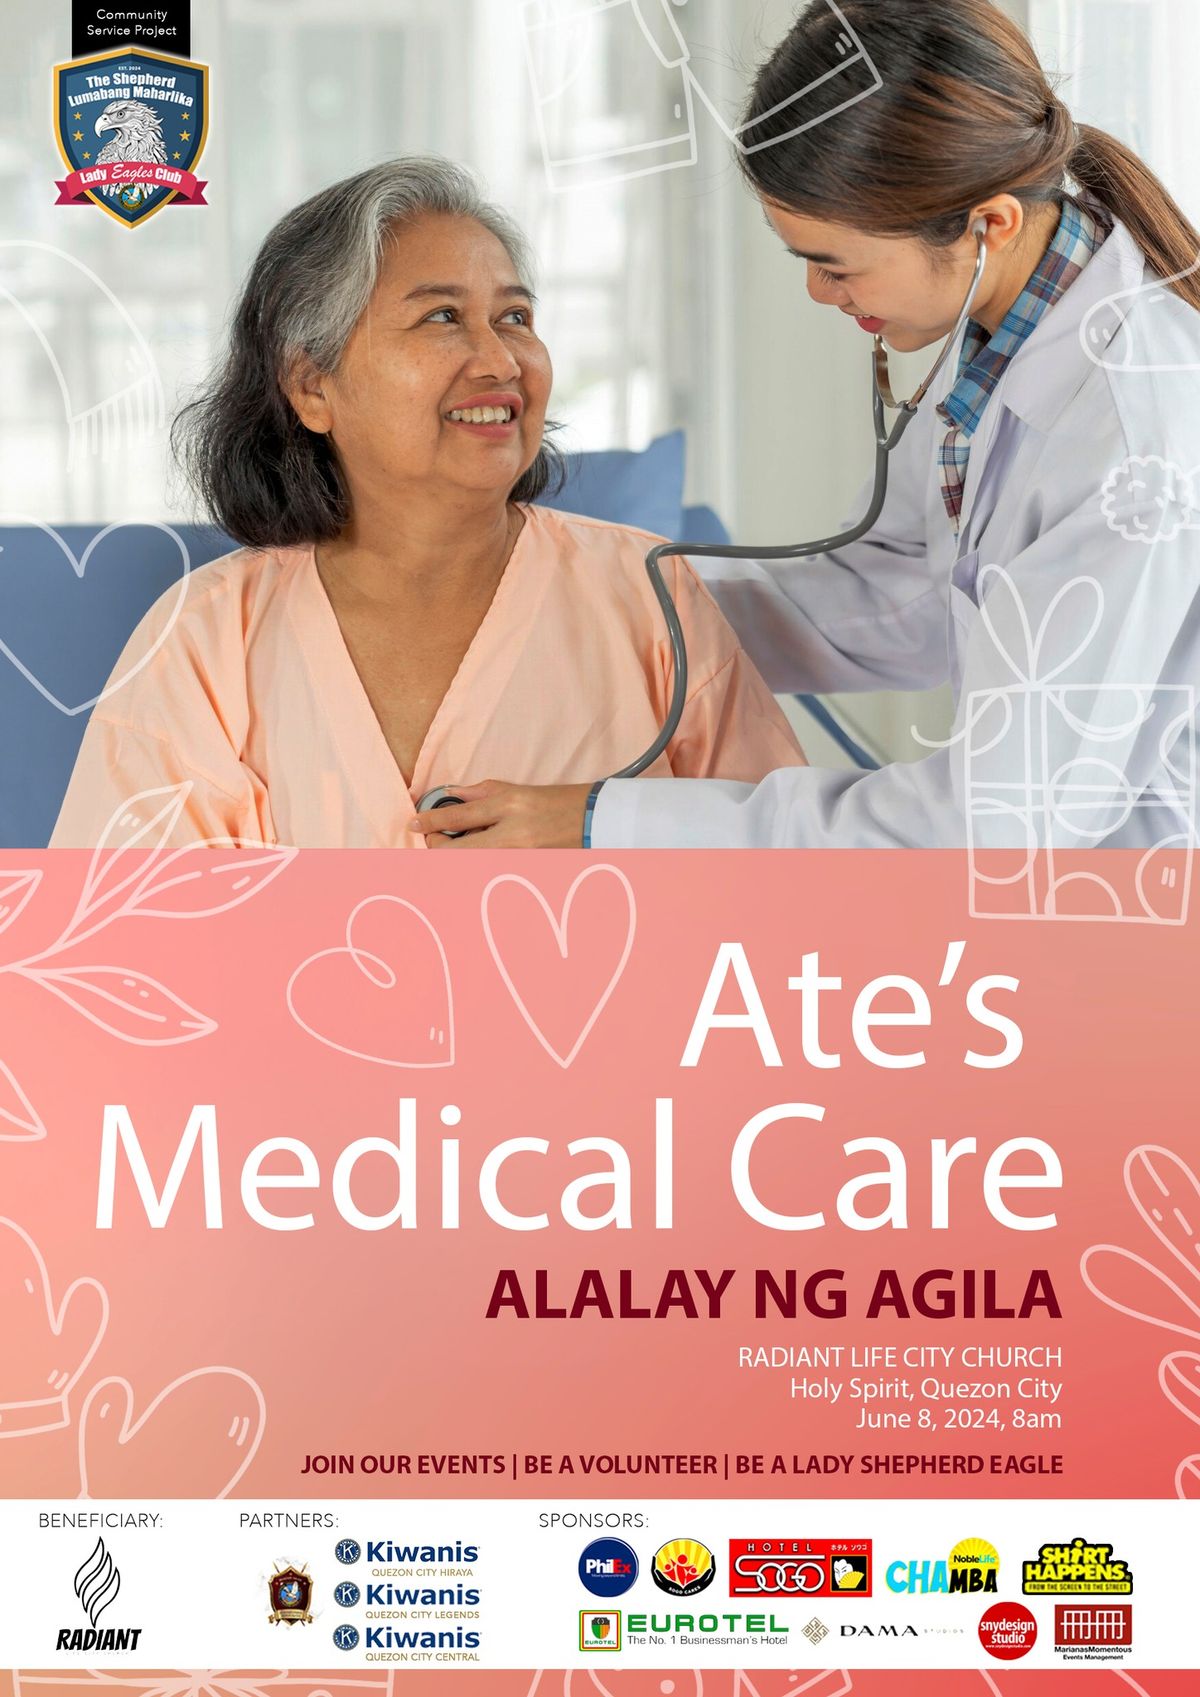 Medical Mission - Alalay ng Agila Community Service Project